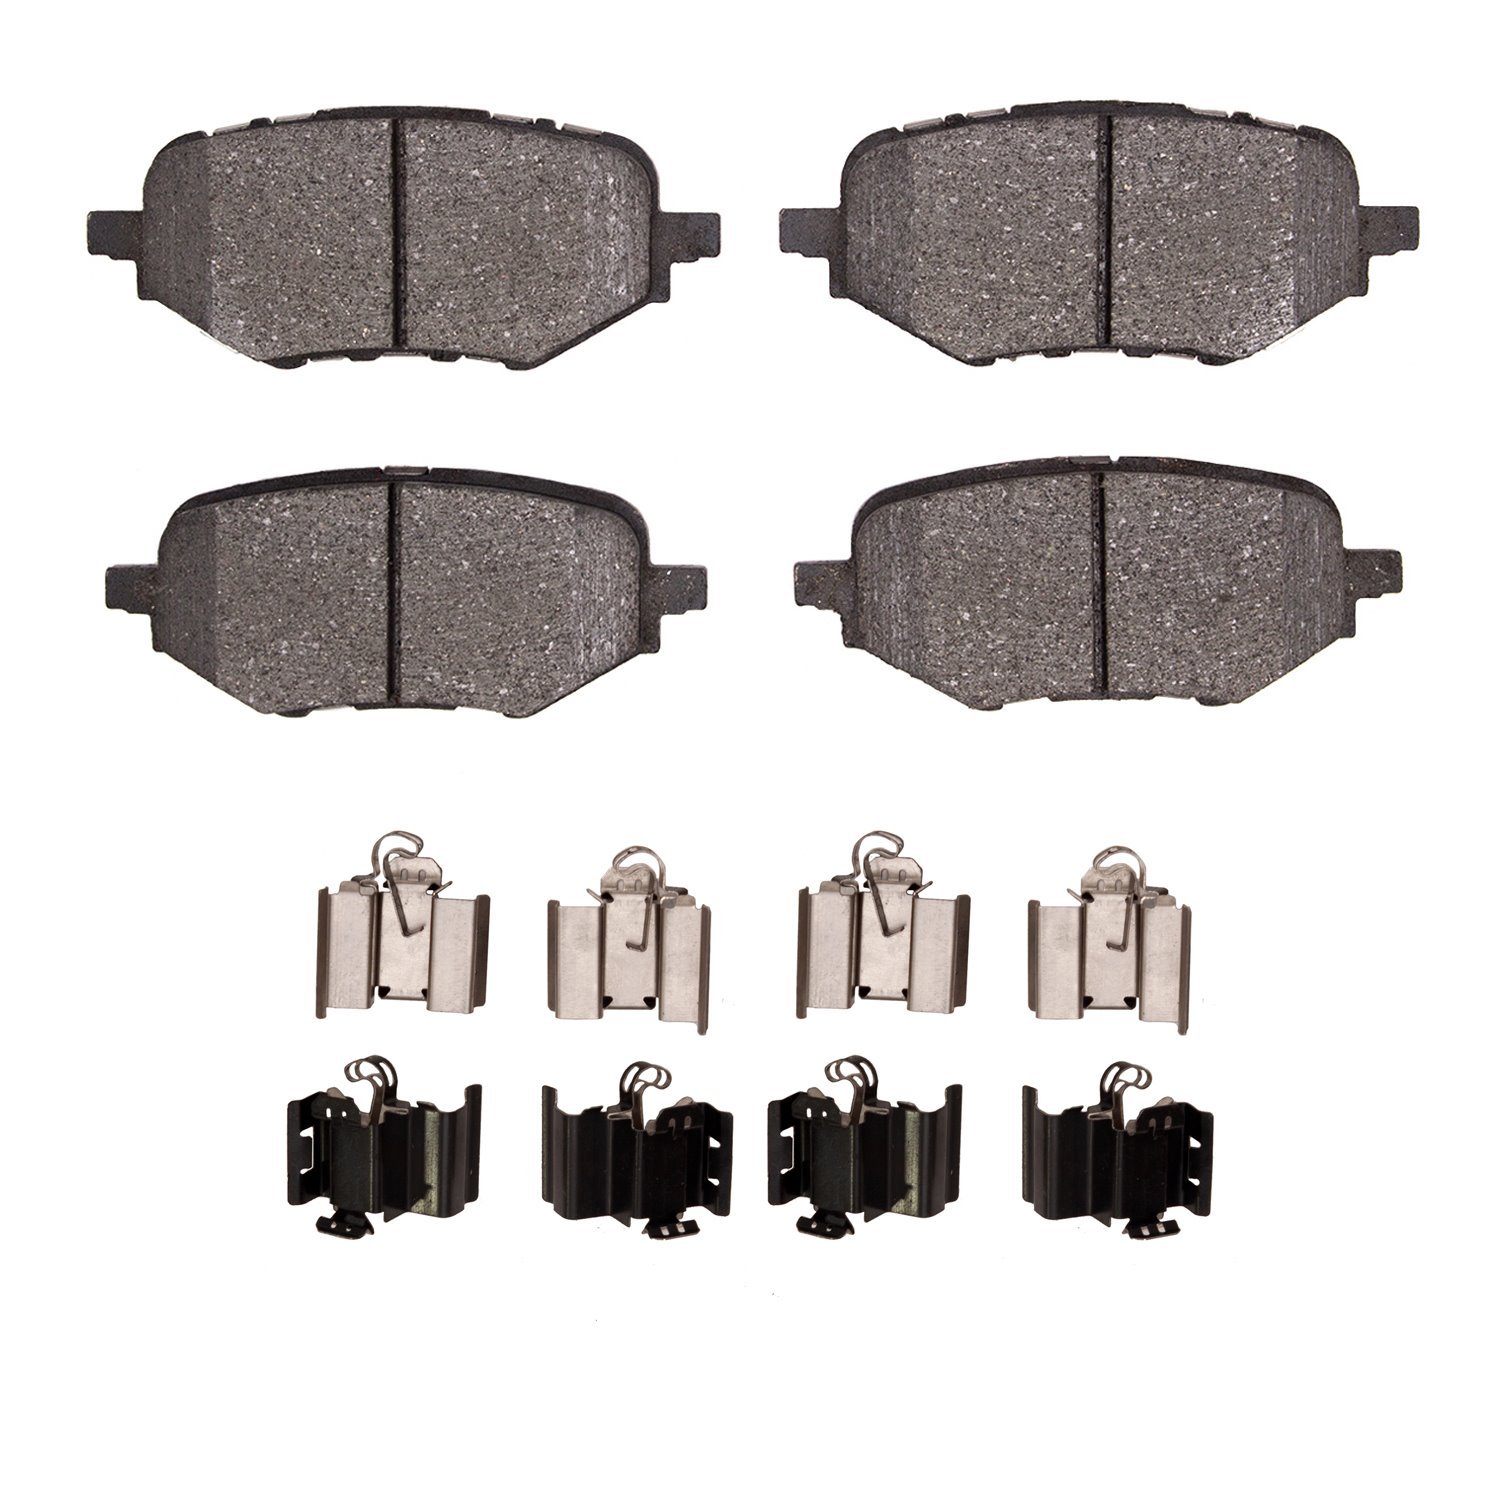 1551-2116-01 5000 Advanced Ceramic Brake Pads & Hardware Kit, Fits Select Acura/Honda, Position: Rear